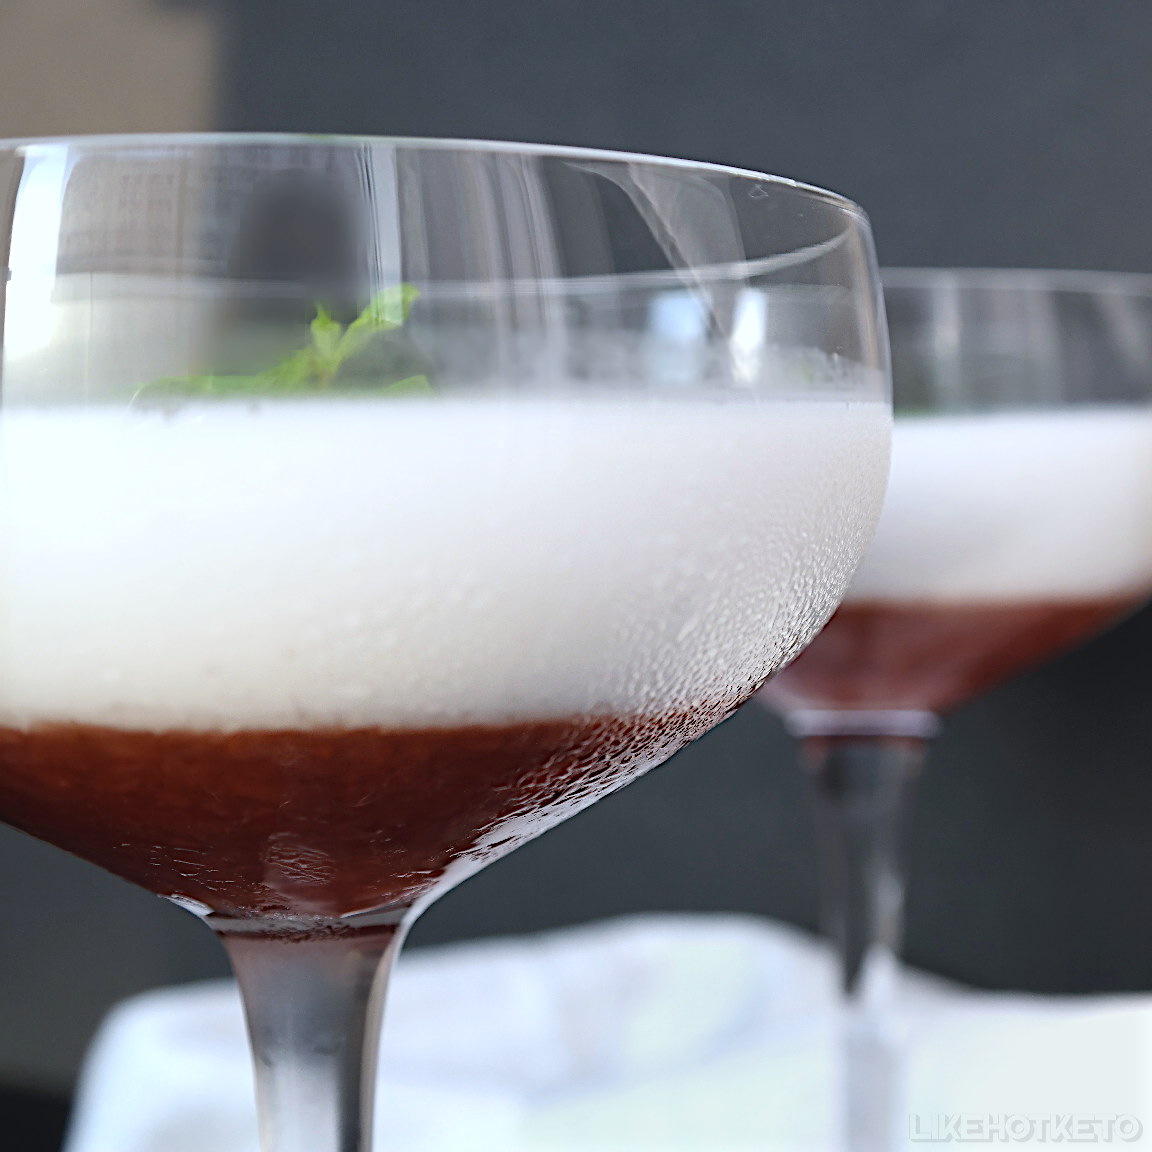 Keto coconut milk panna cotta with strawberry sauce in cocktailglasses.